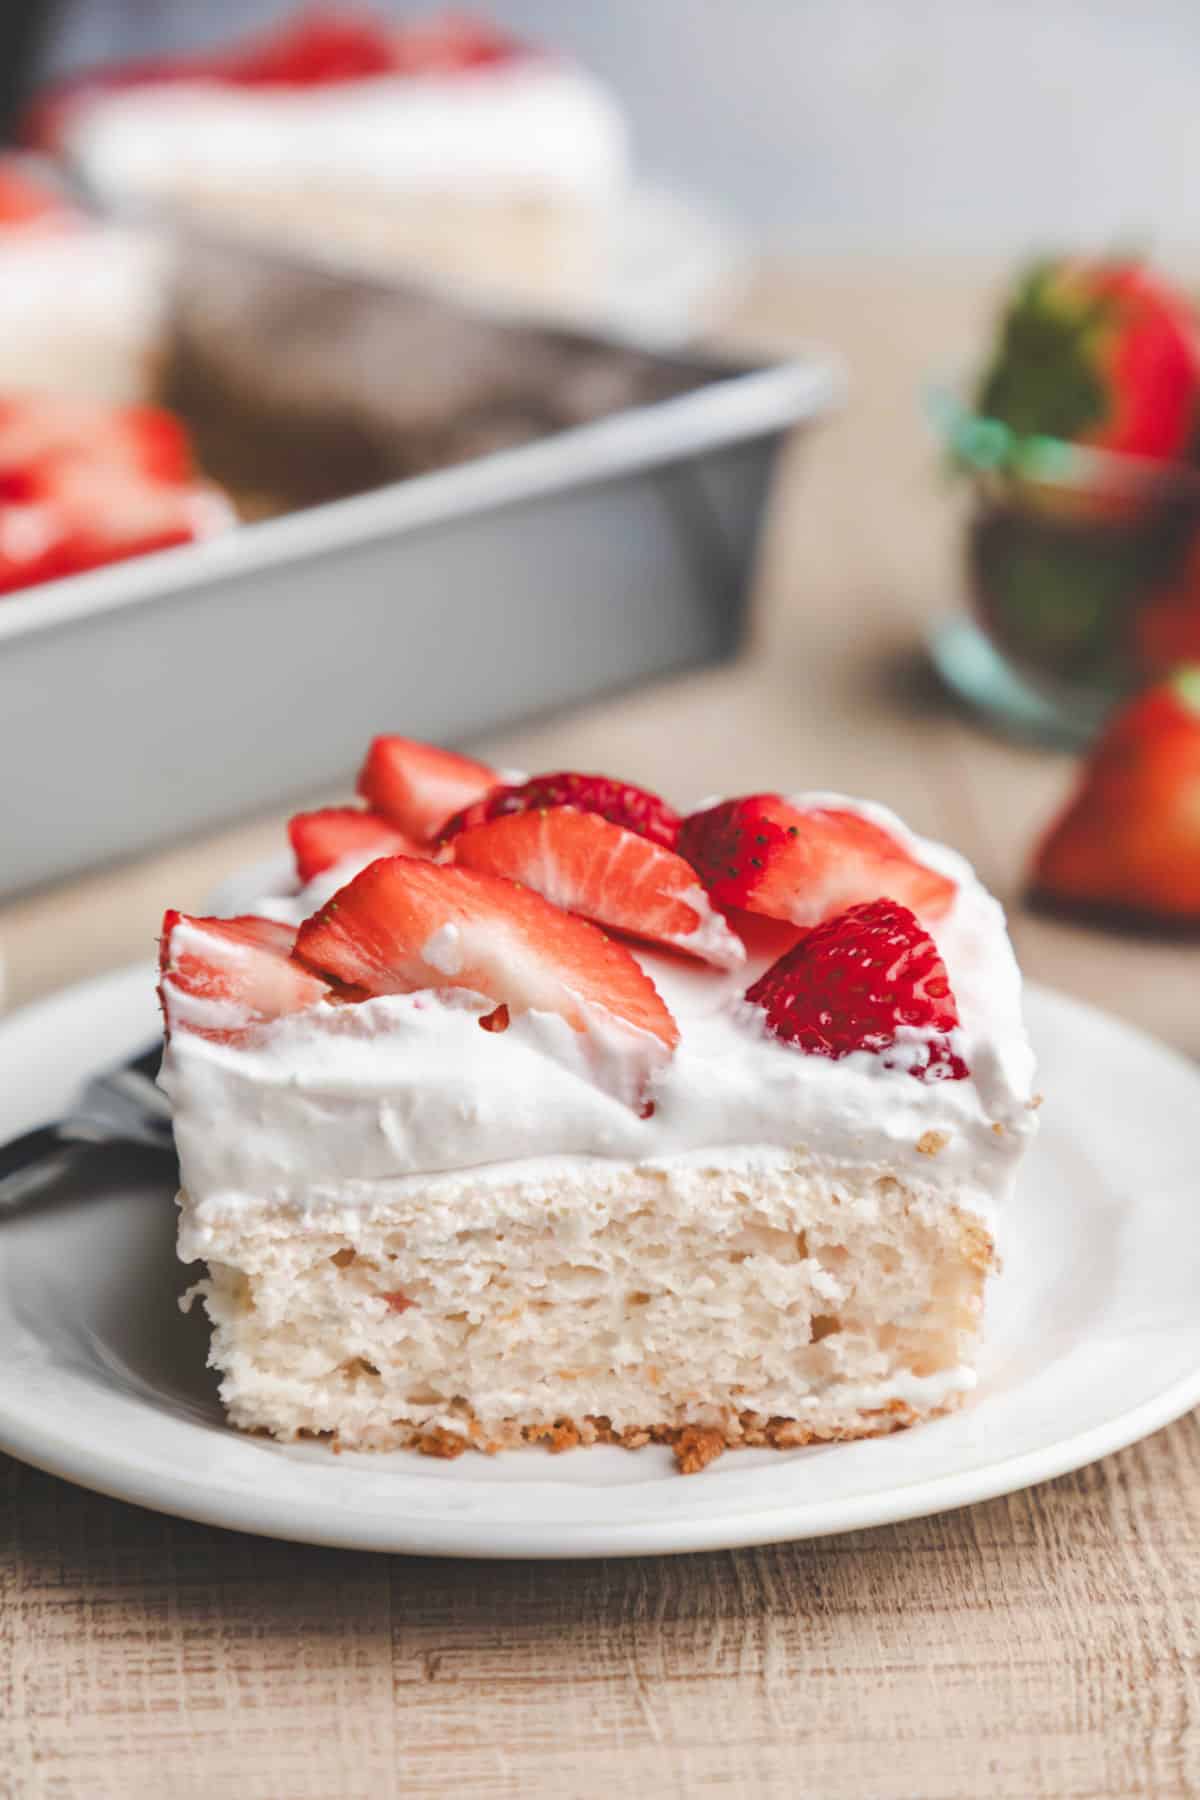 A slice of strawberry yogurt cake topped with fresh strawberry slices.